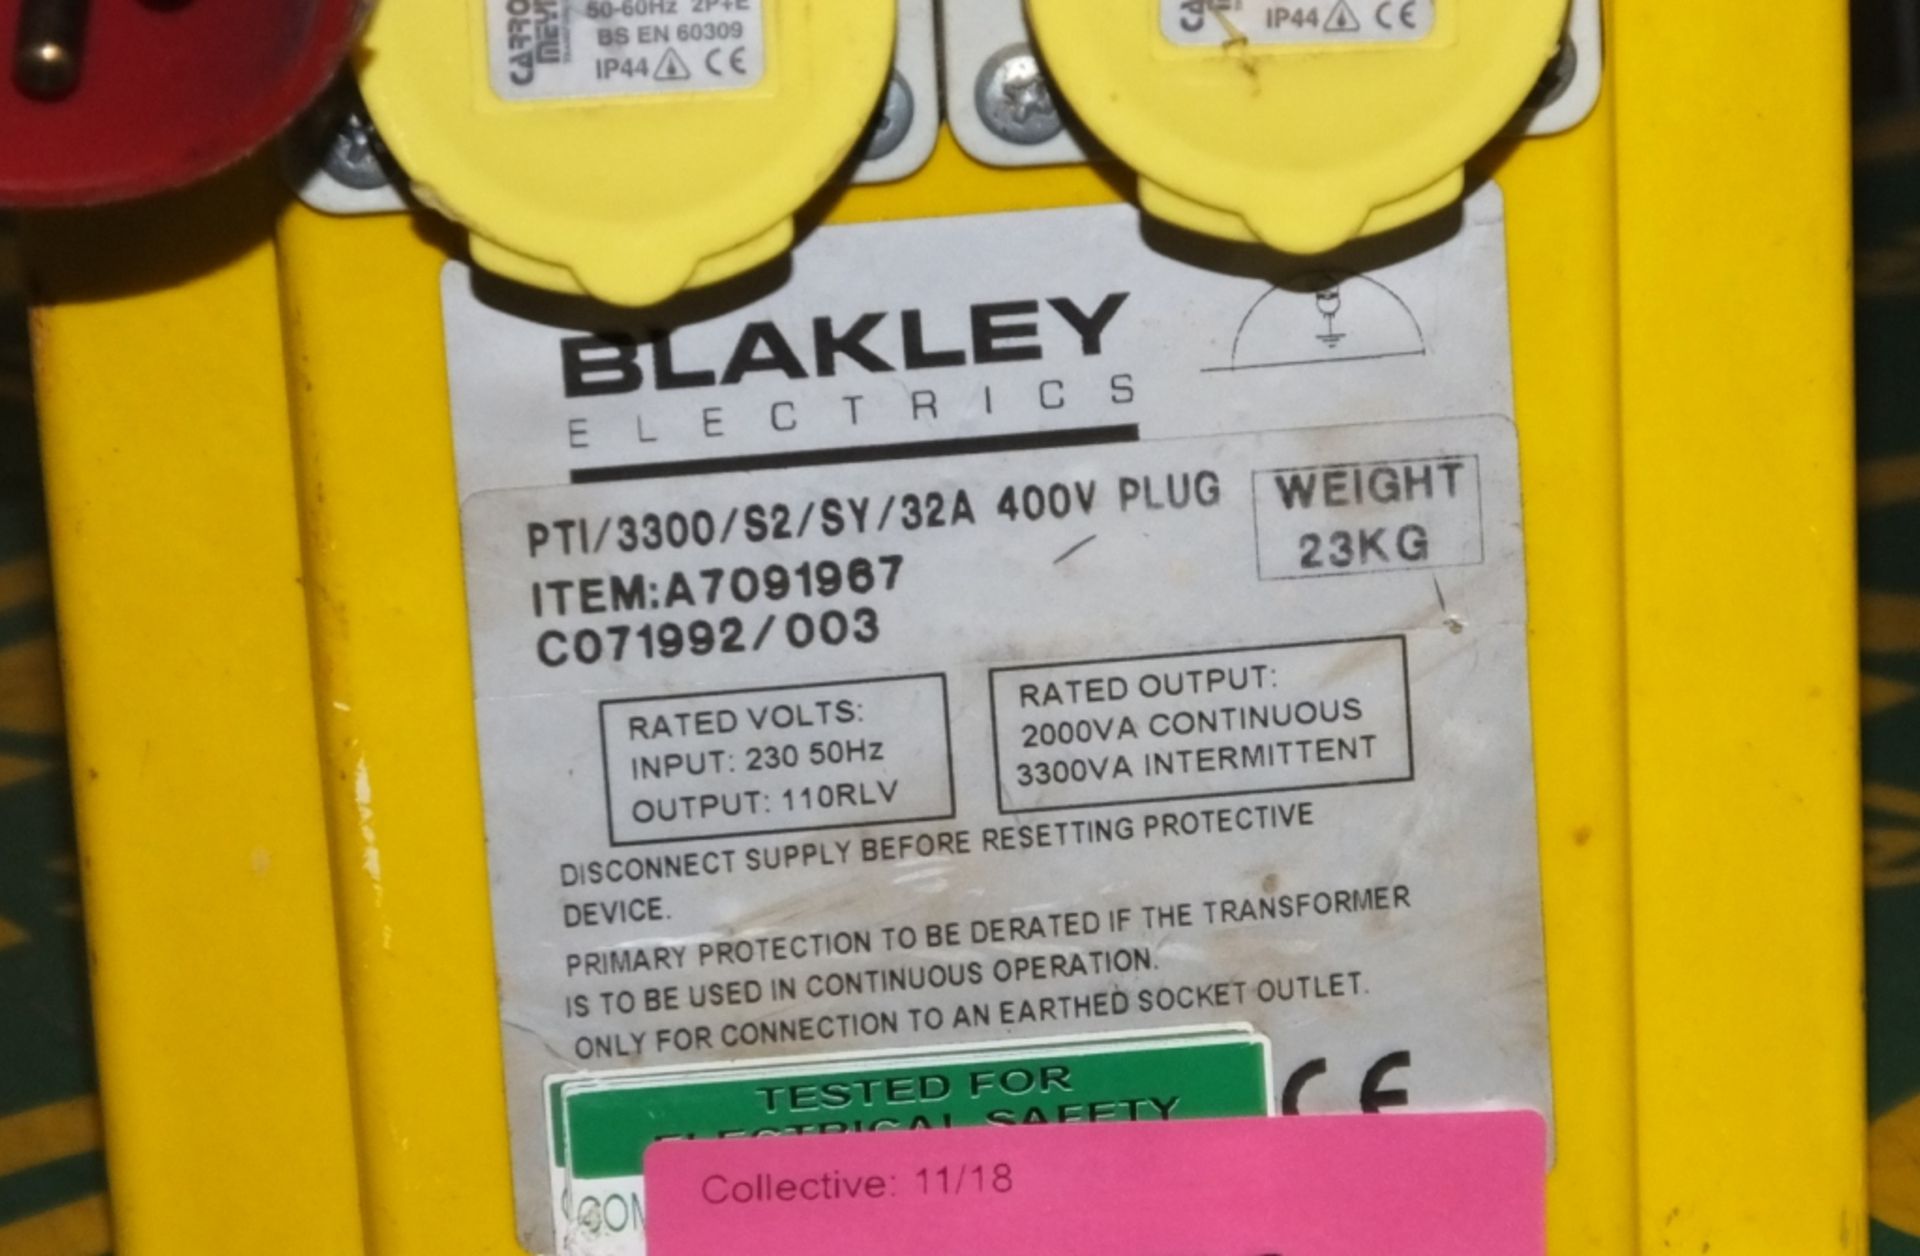 110V Transformer - Blakeley PTI/3300/S2/SY/32A - 400V plug - Image 2 of 2